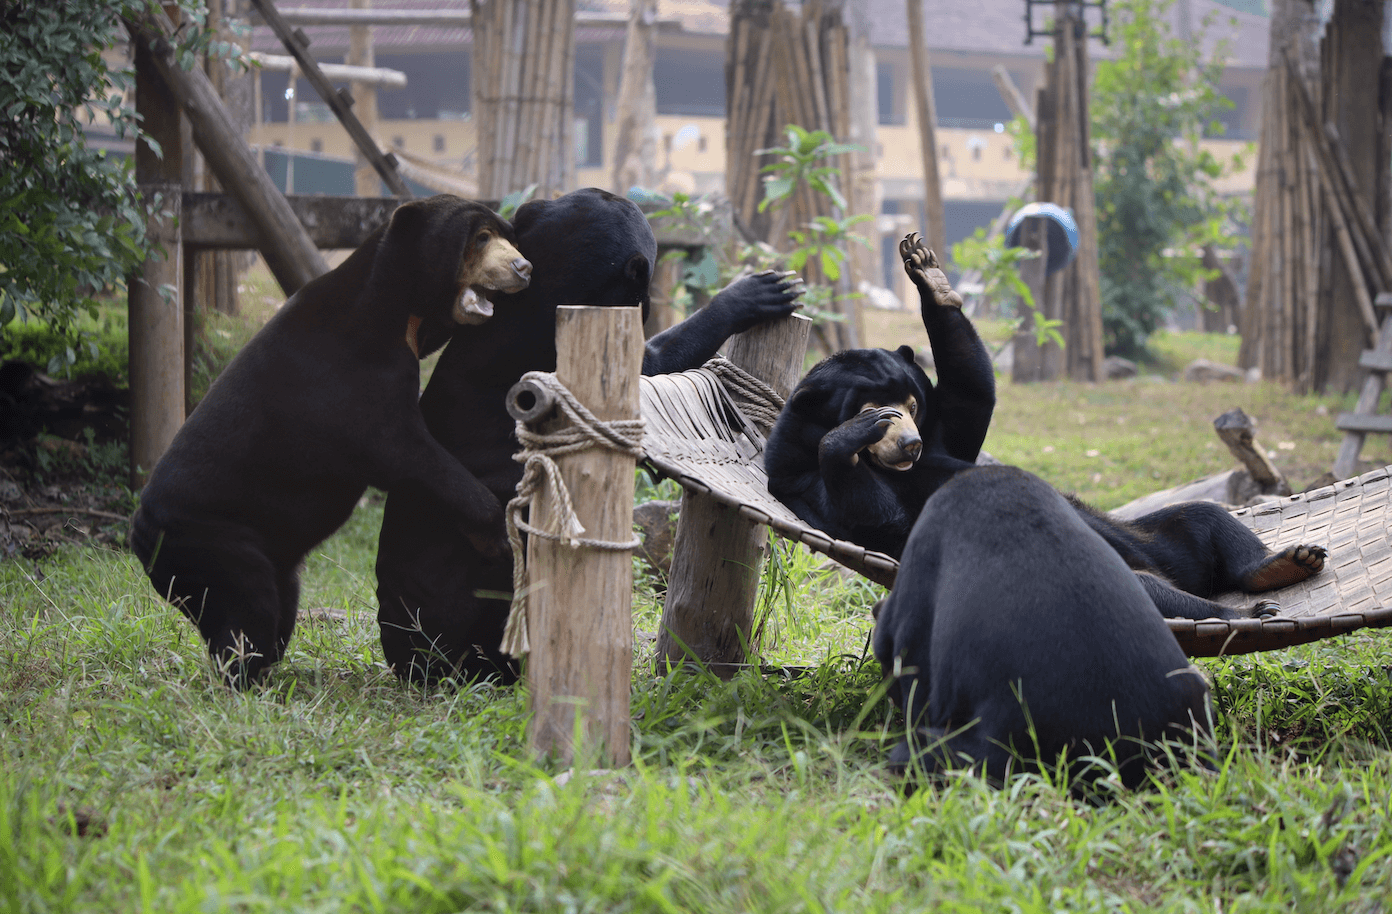 Bears playing at an animal sanctuary